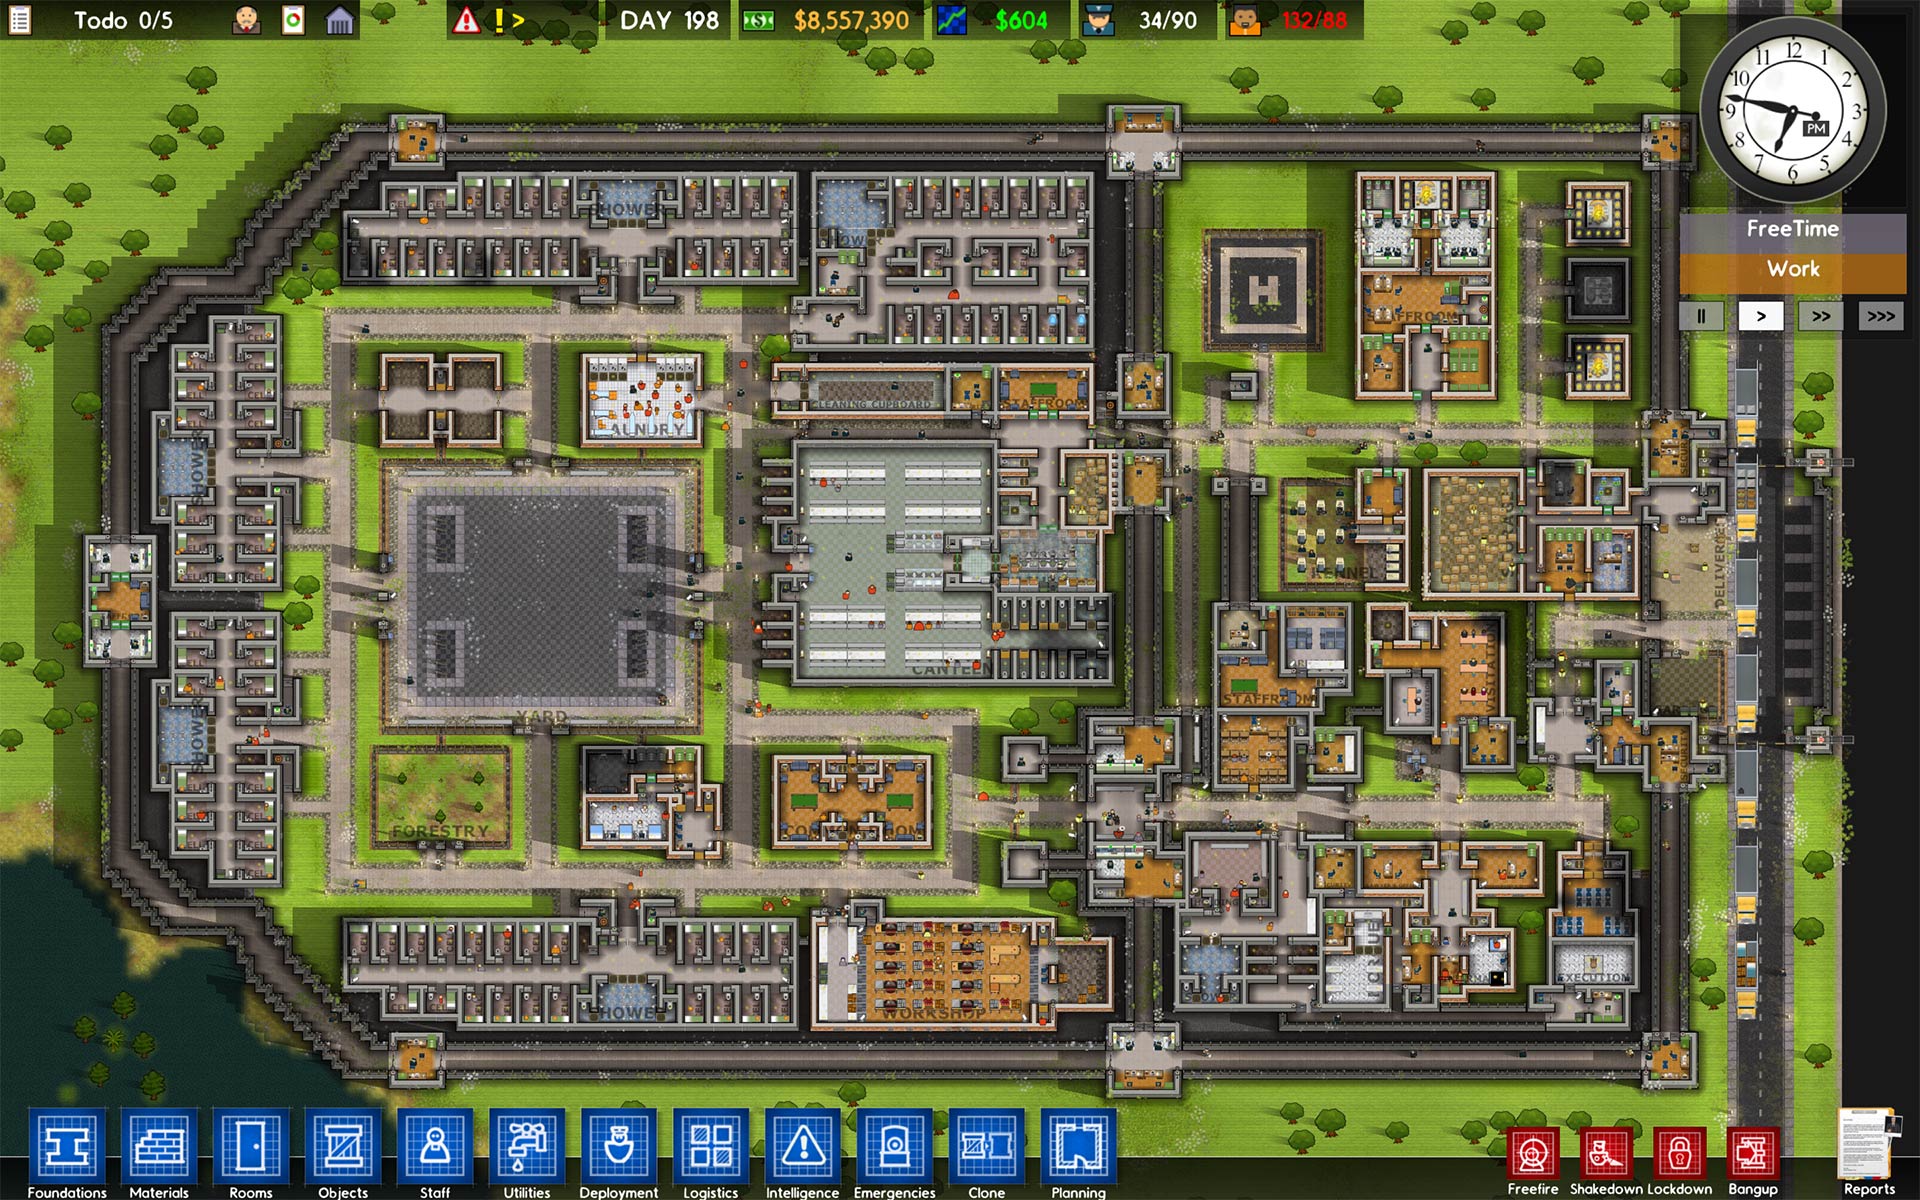 Prison architect layouts